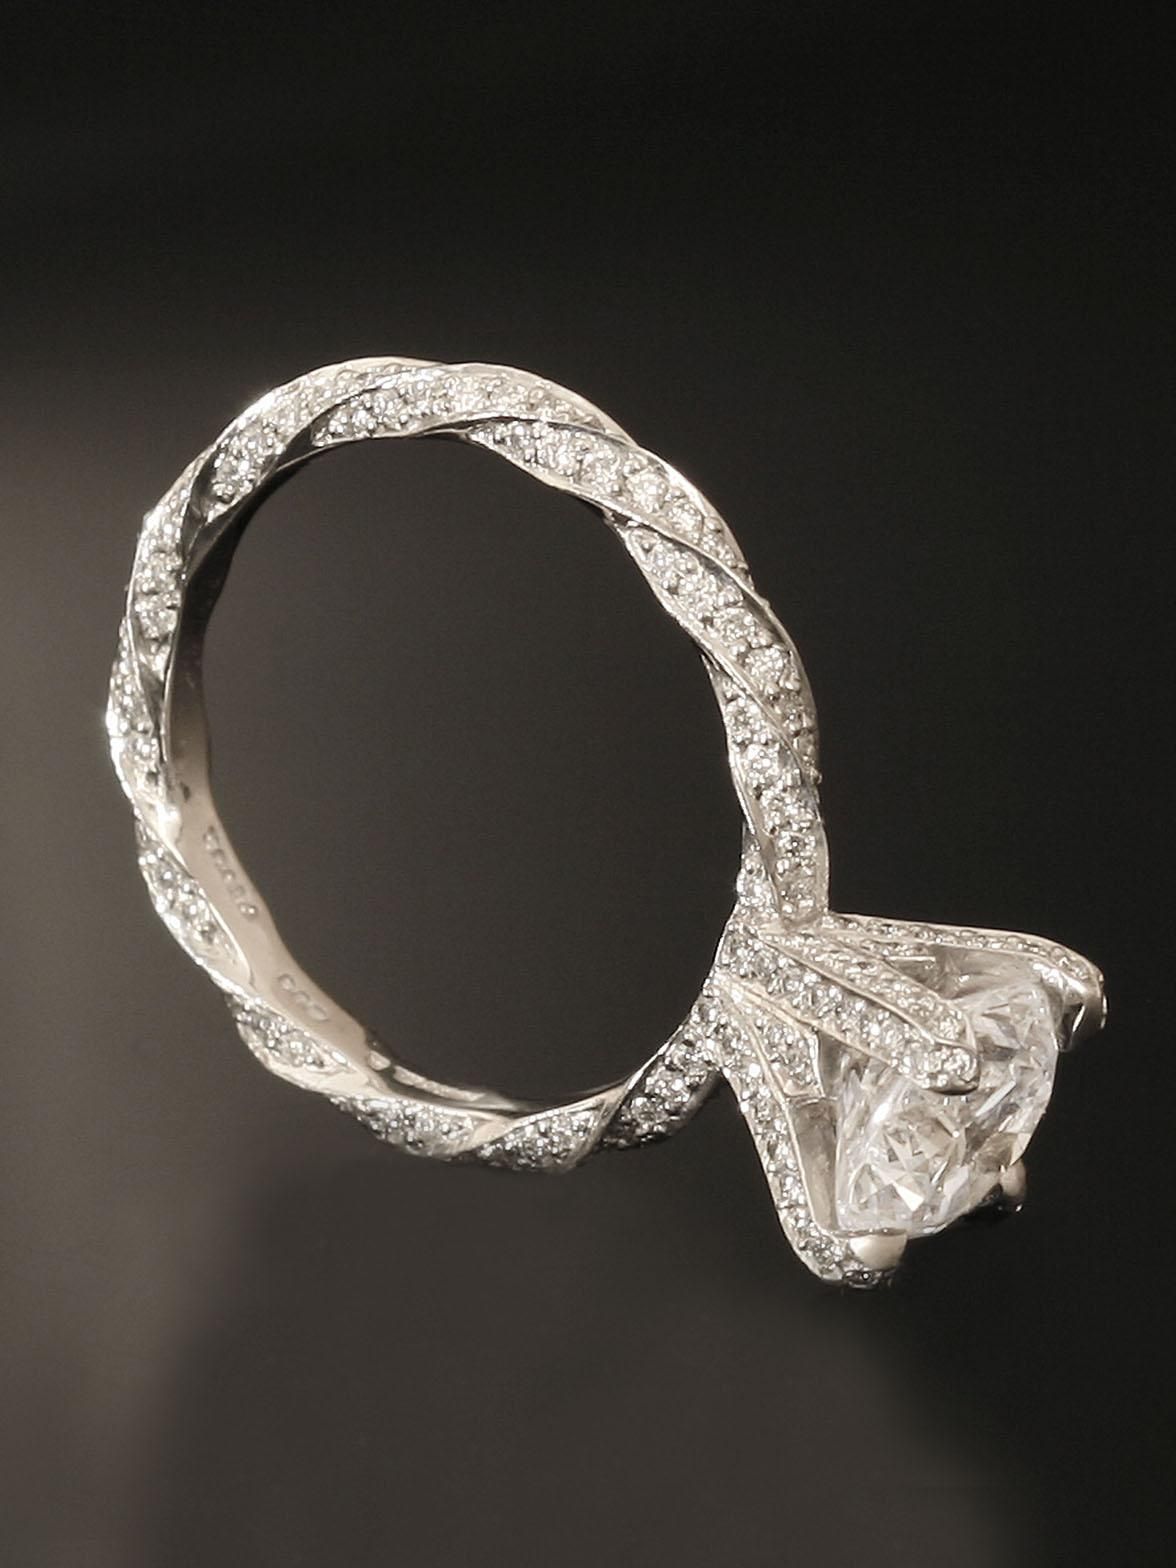 Michael B. Handmade Platinum Infinity Collection Engagement Ring. Pave set diamo